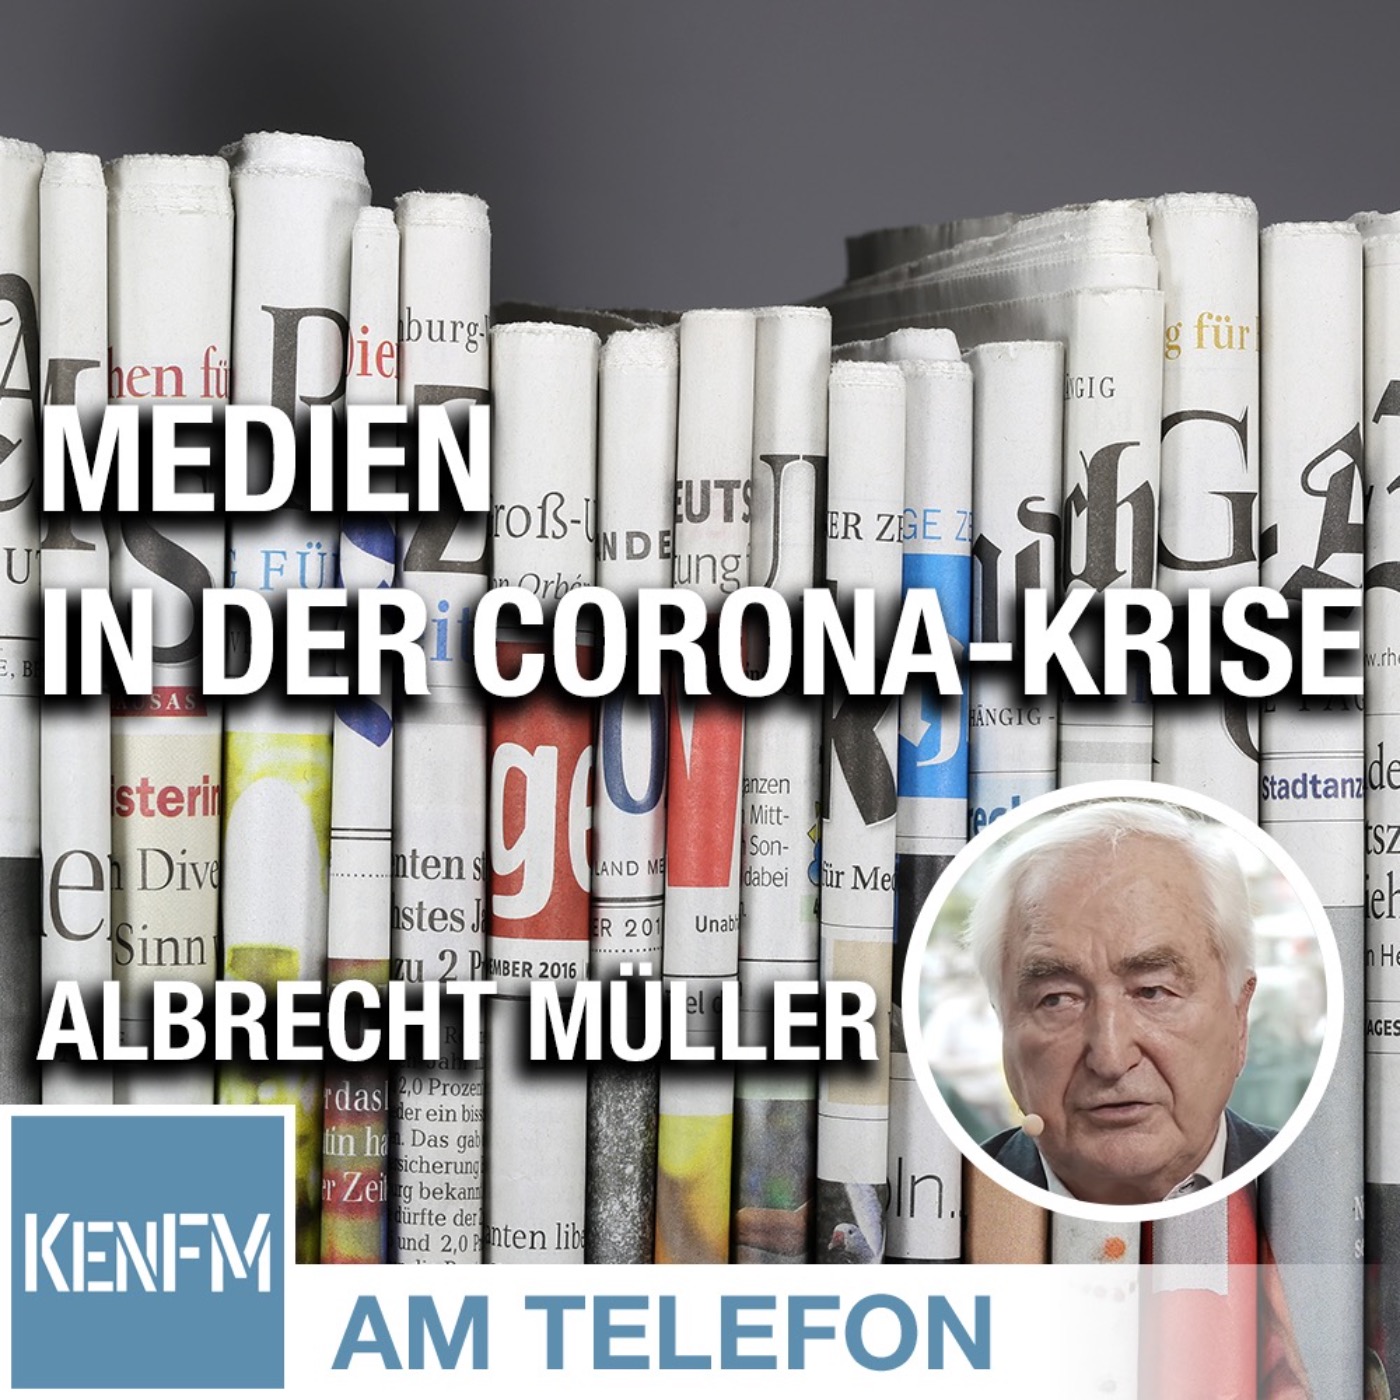 Am Telefon zur medialen Berichterstattung in Zeiten der Corona-Krise: Albrecht Müller